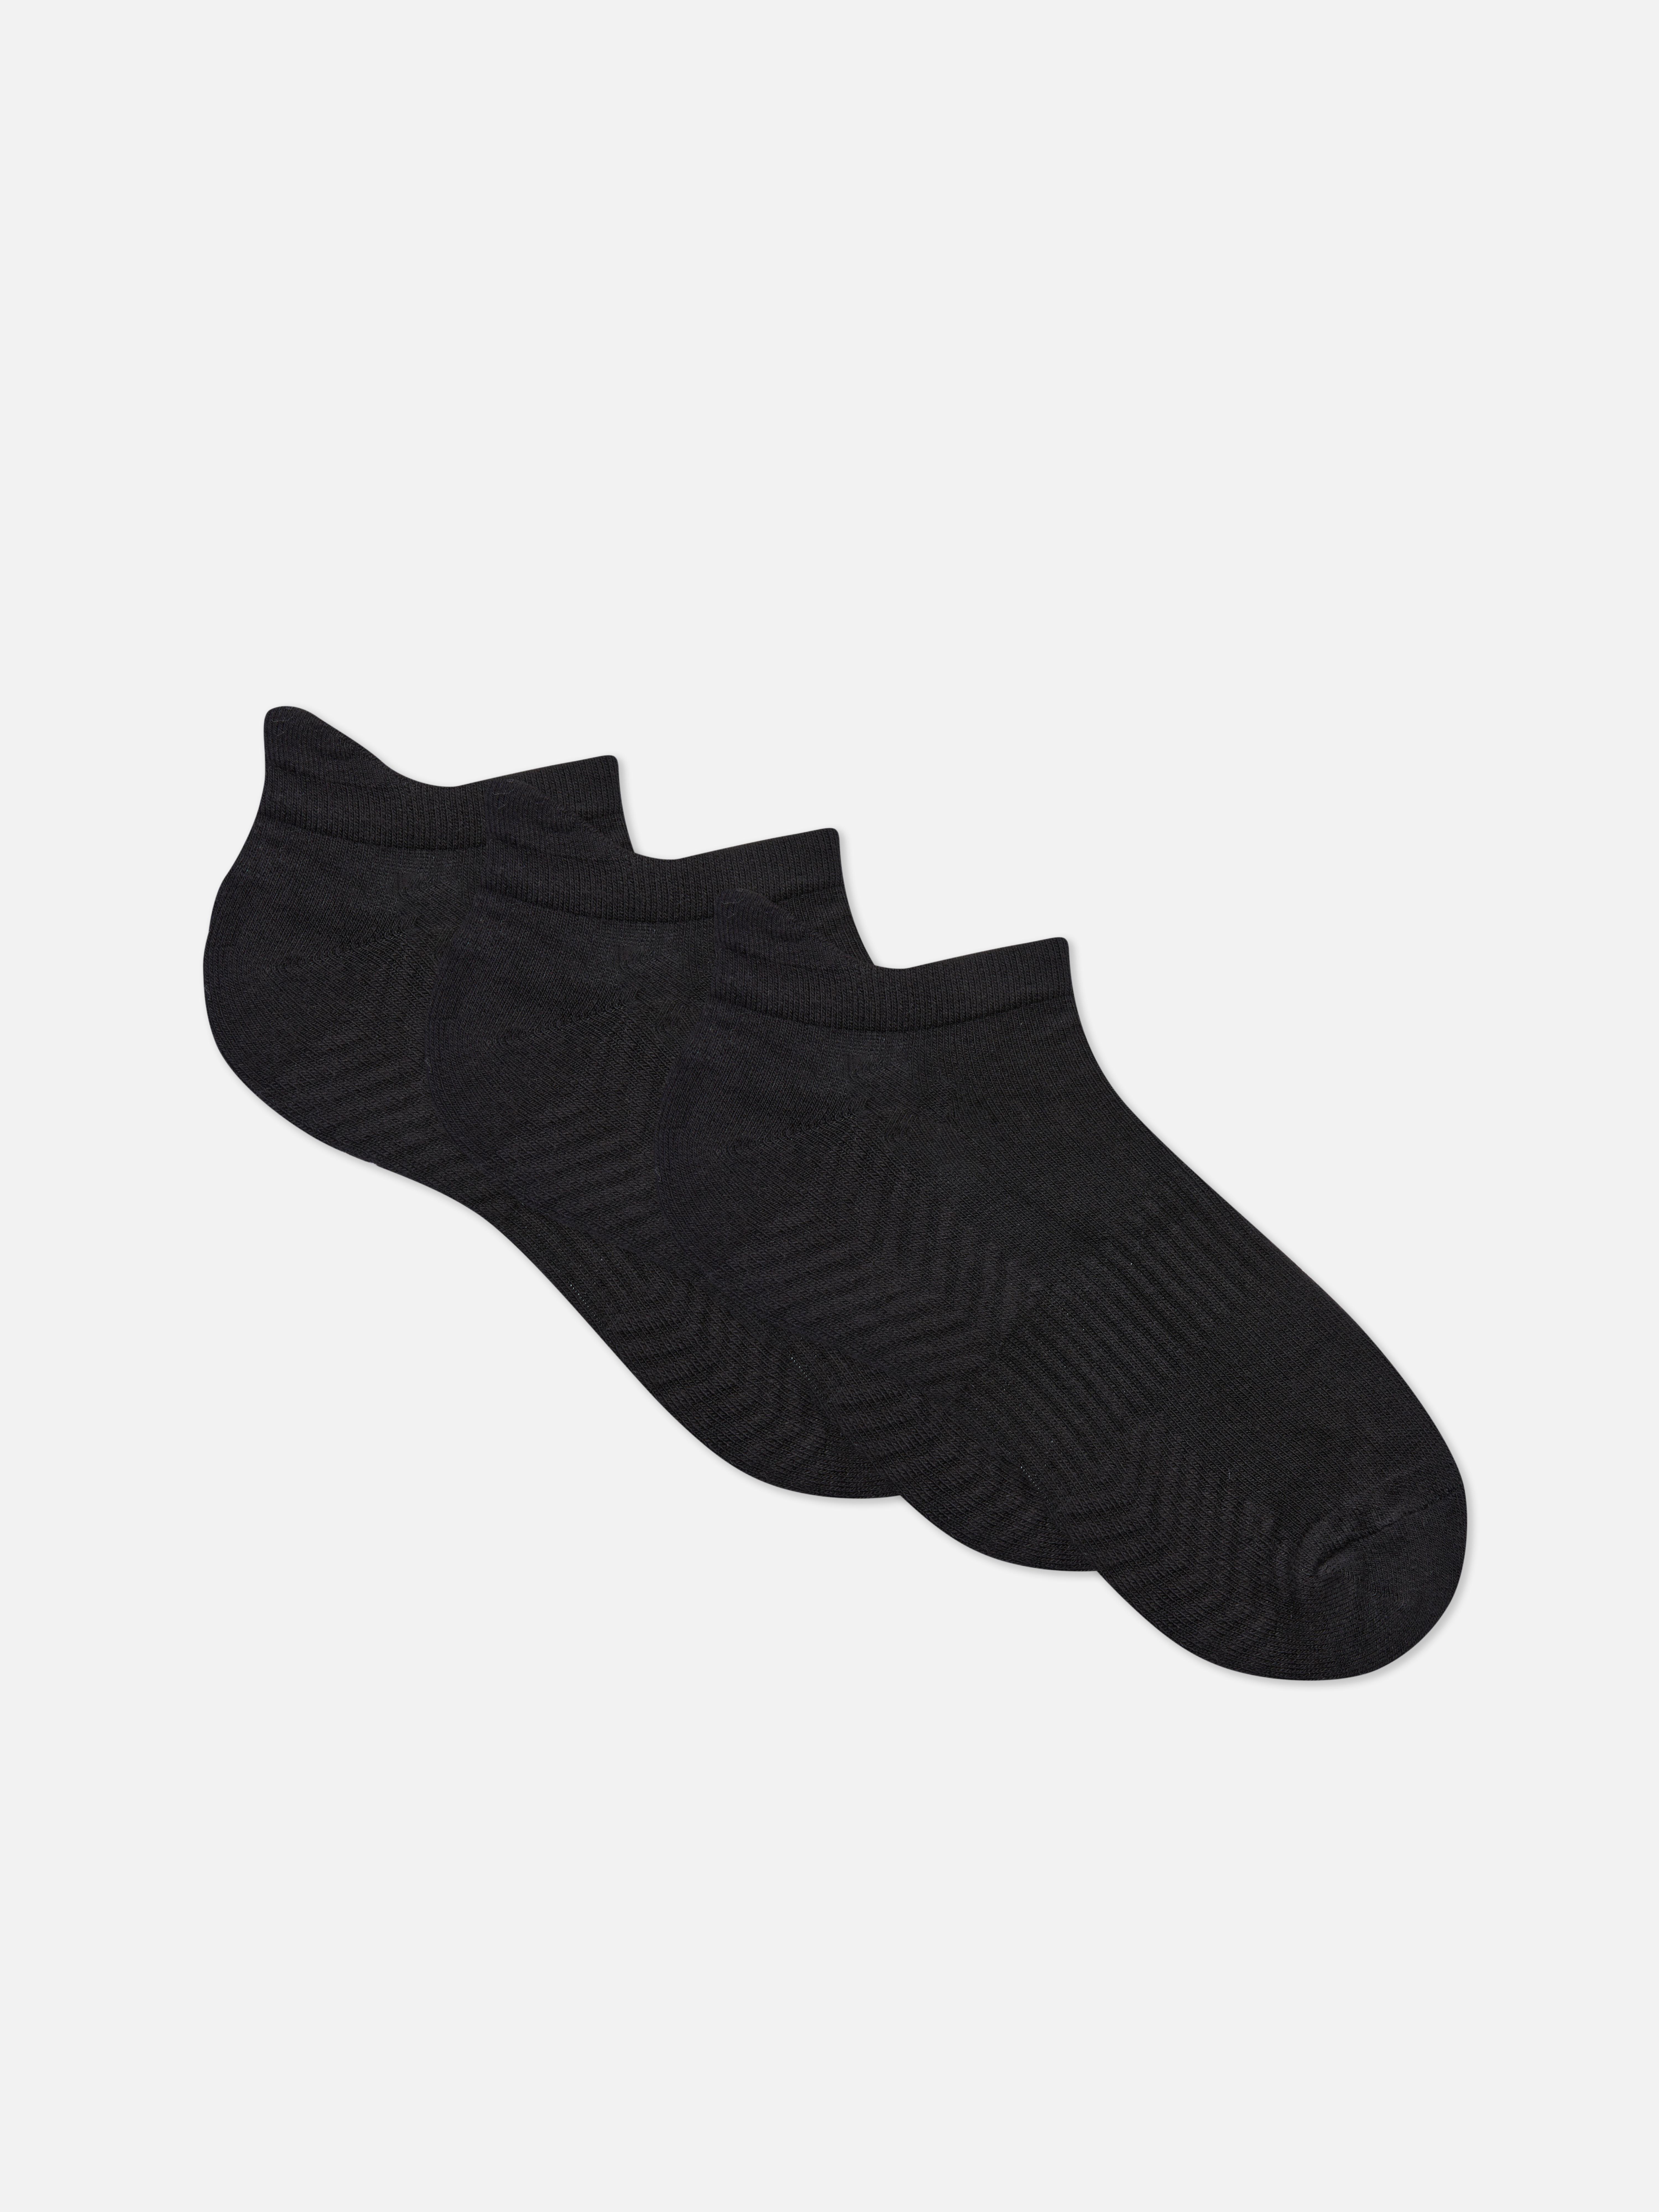 Sneaker Socken mit Polsterung, 3er-Pack